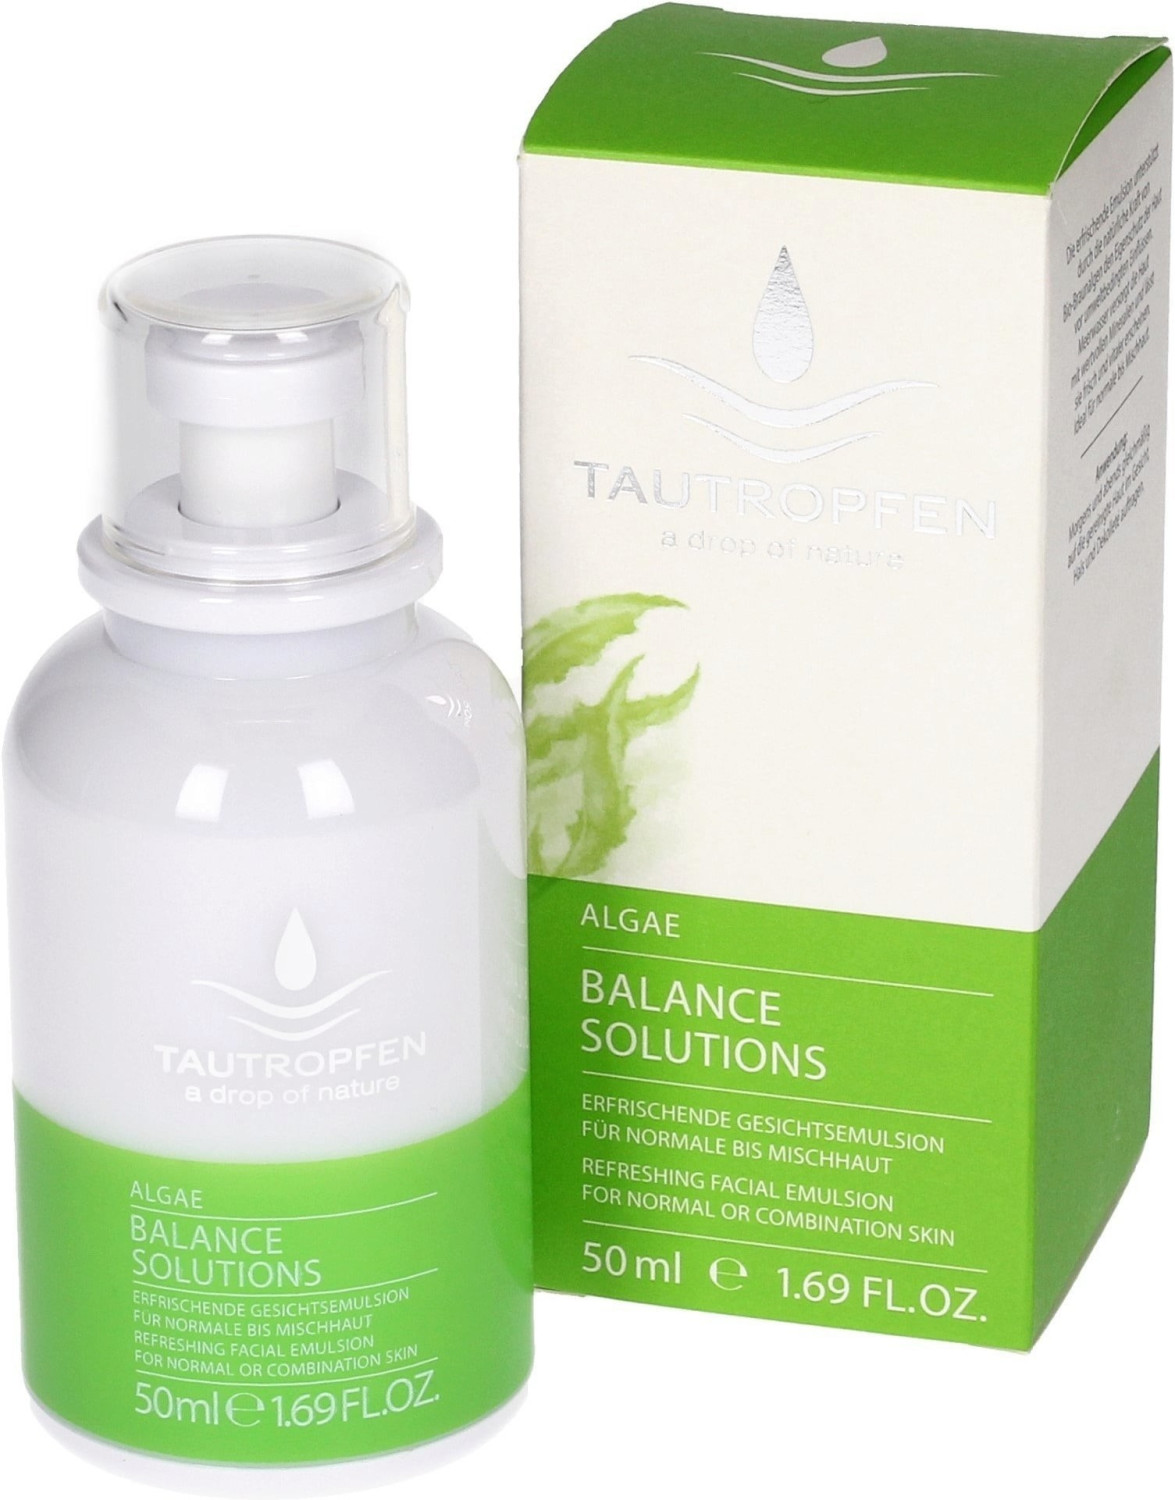 Tautropfen Algae Balance Solutions (50ml)